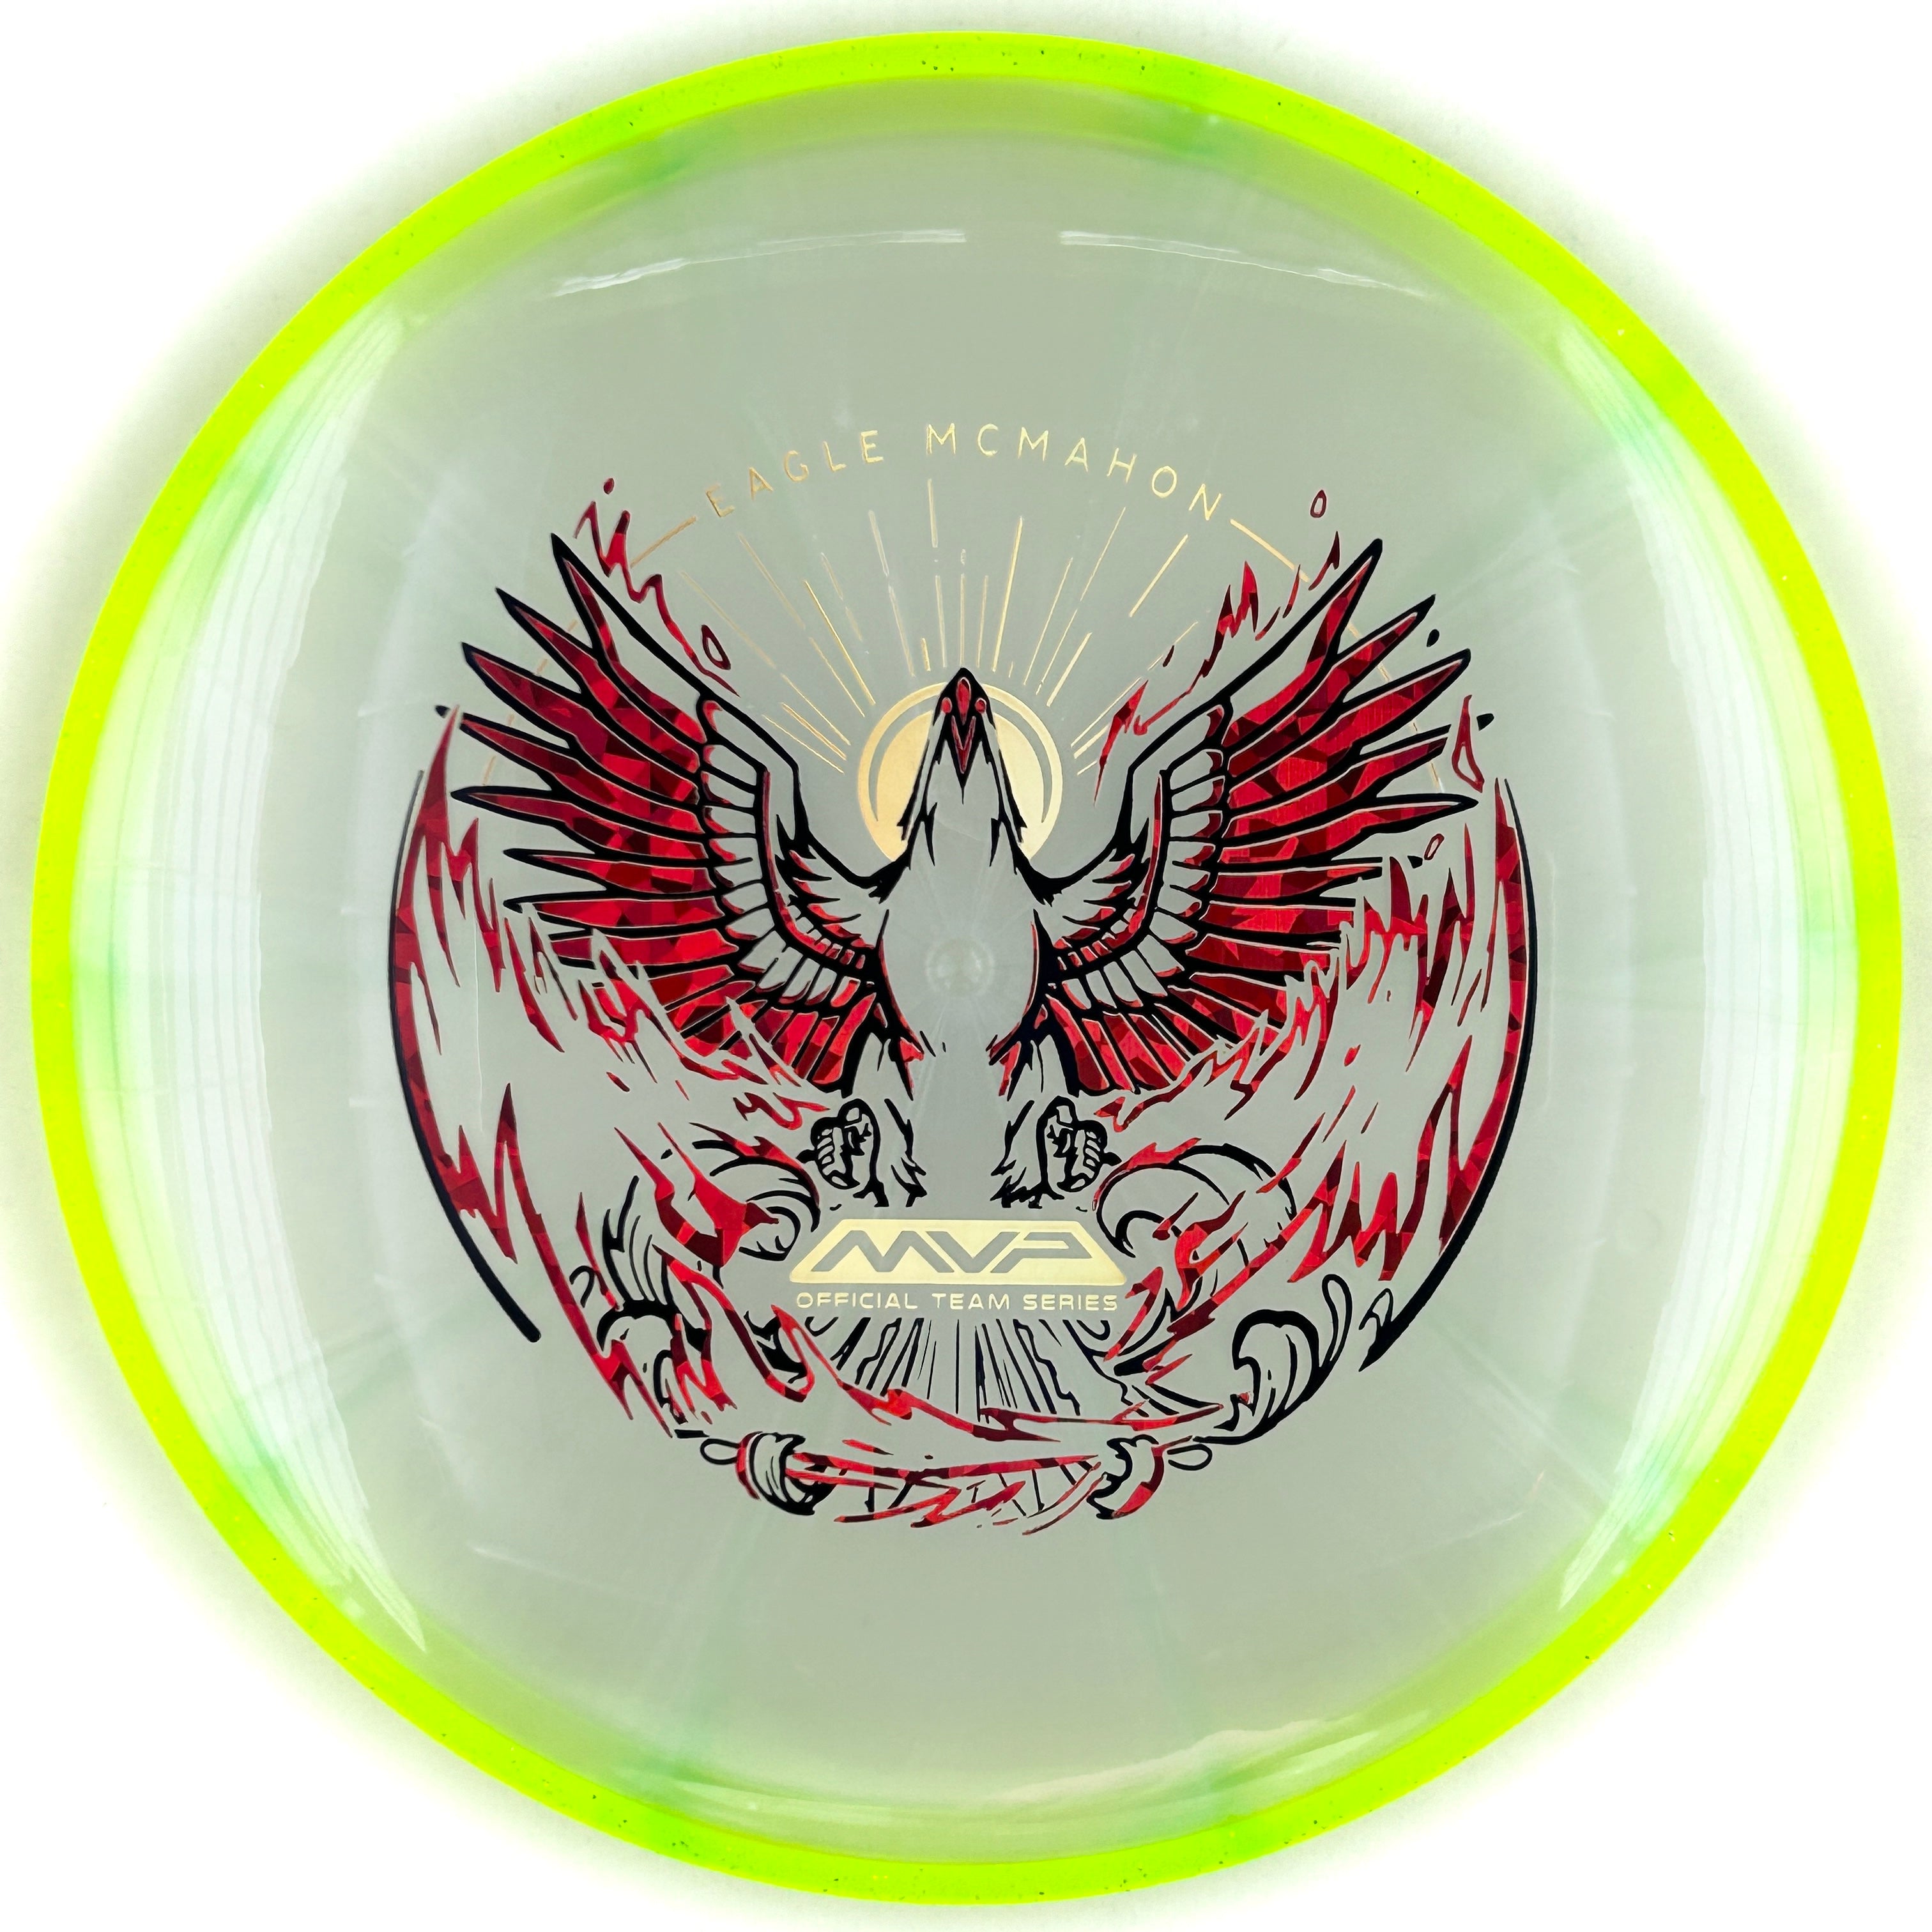 Axiom Prism Proton - Eagle McMahon Team Series "Rebirth" Envy